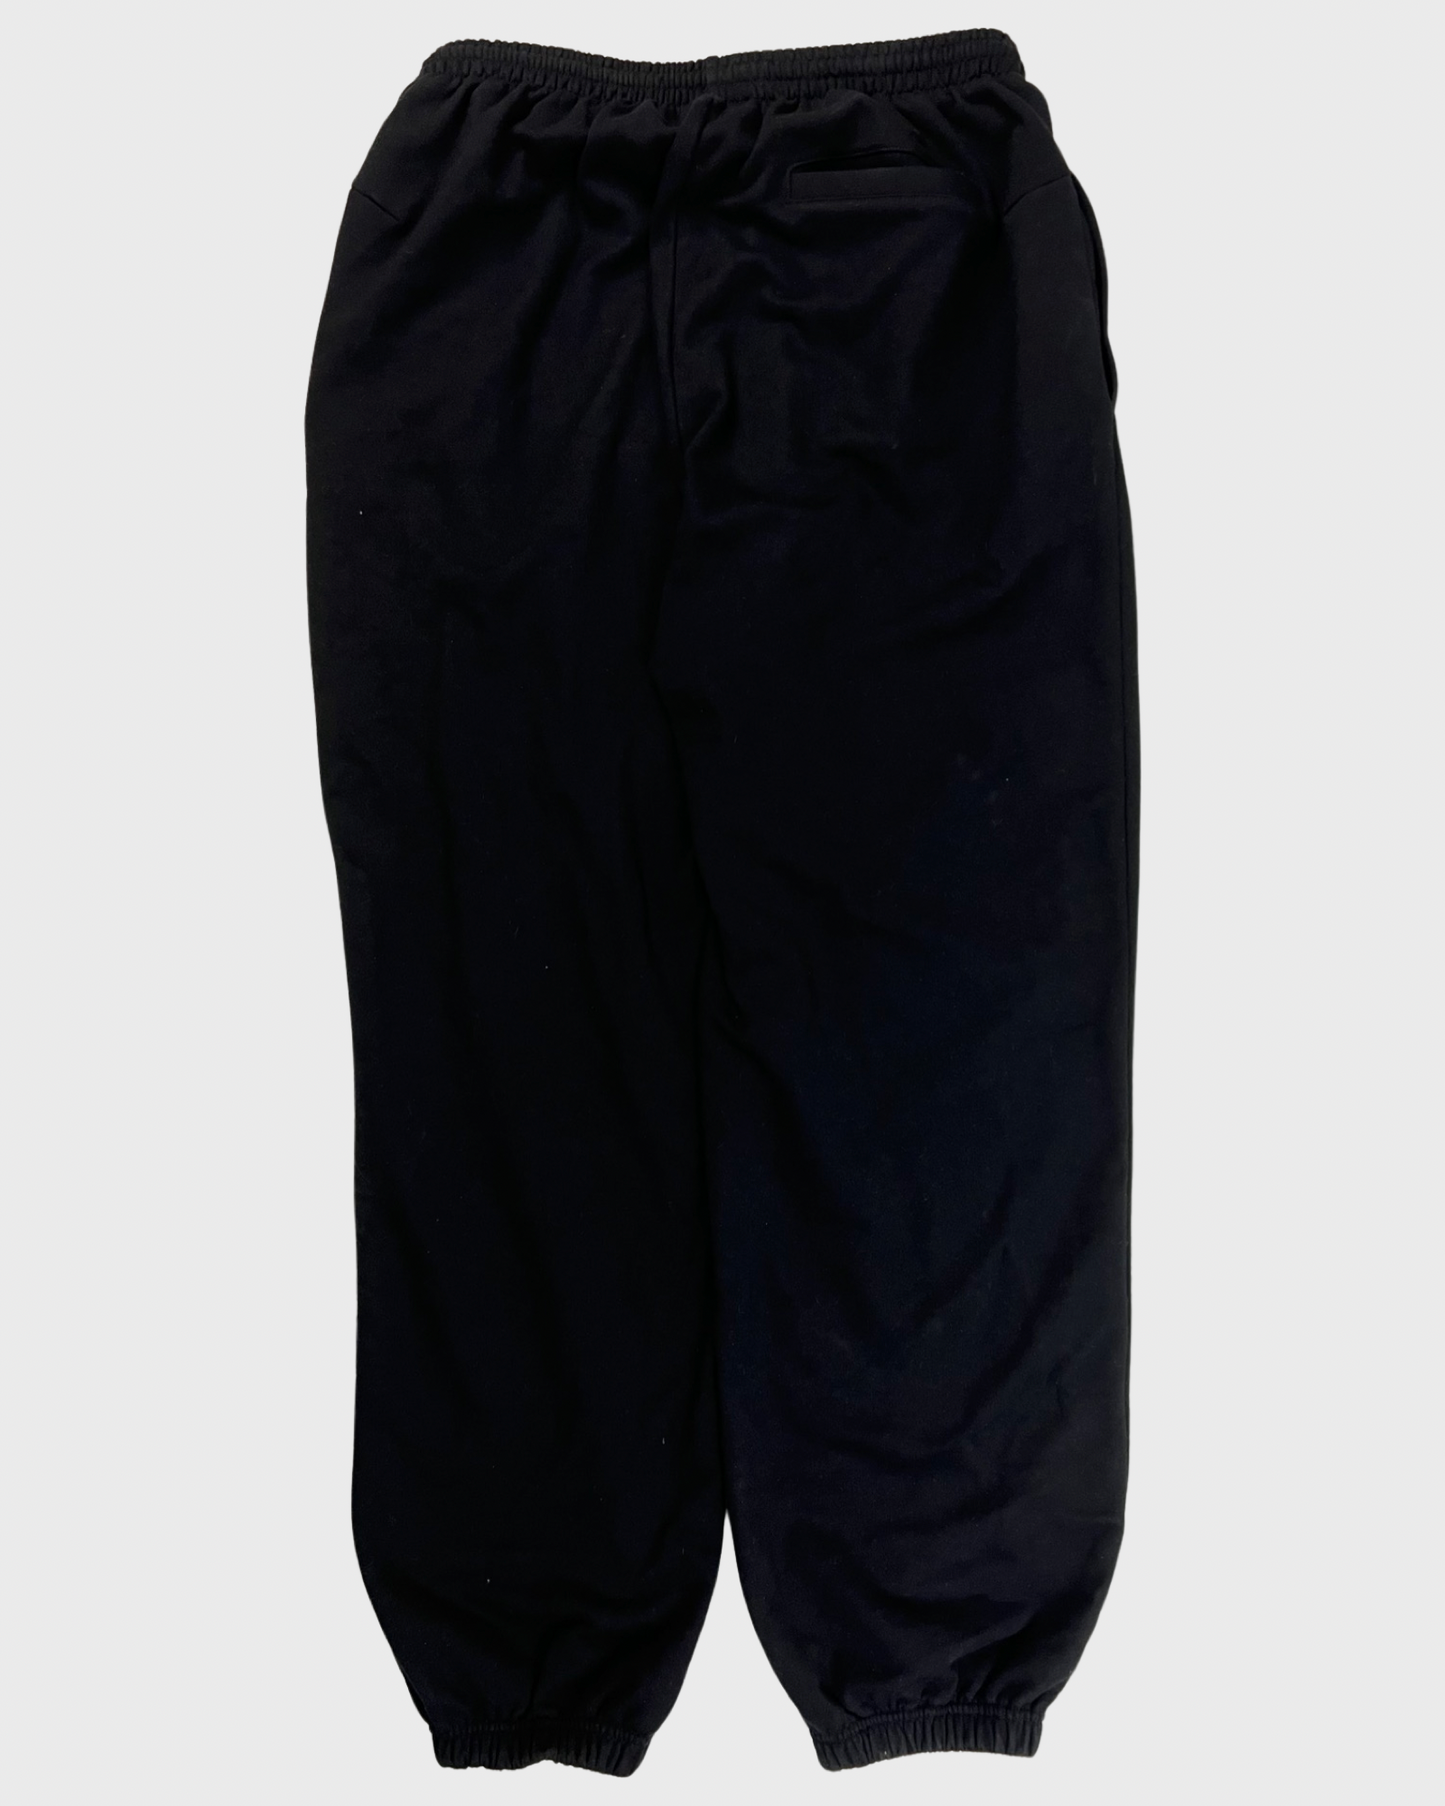 Balenciaga Sporty B French Terry Sweatpants in black SZ:L